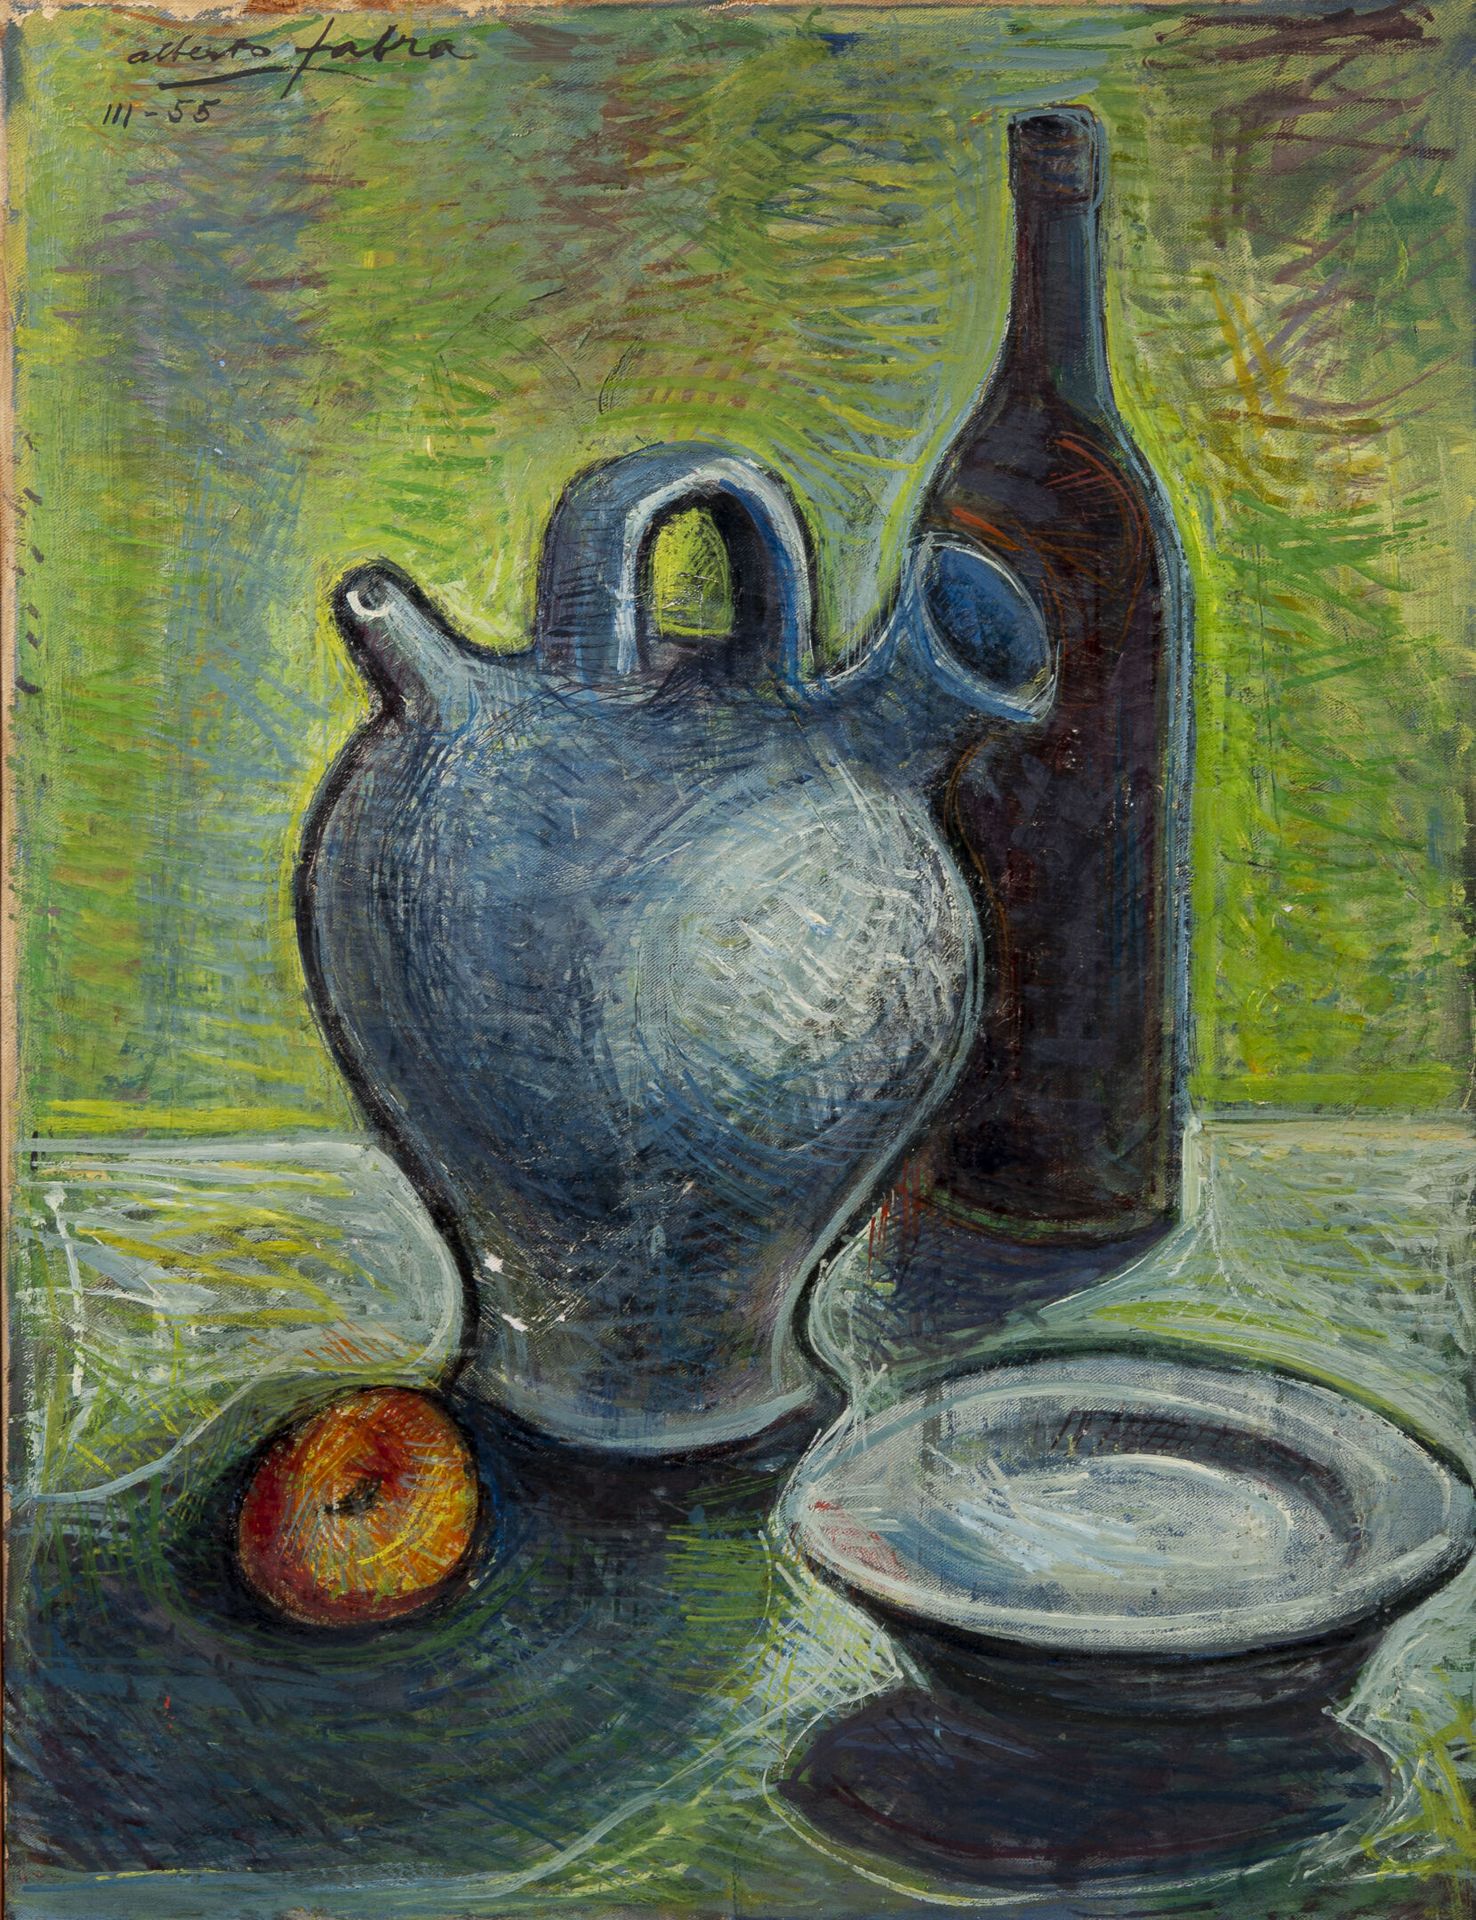 Alberto FABRA (1920-2011) 壶和瓶子的静物画，1955年。

布面油画。

左上角有签名和日期 "III-55"。

65 x 50厘米&hellip;